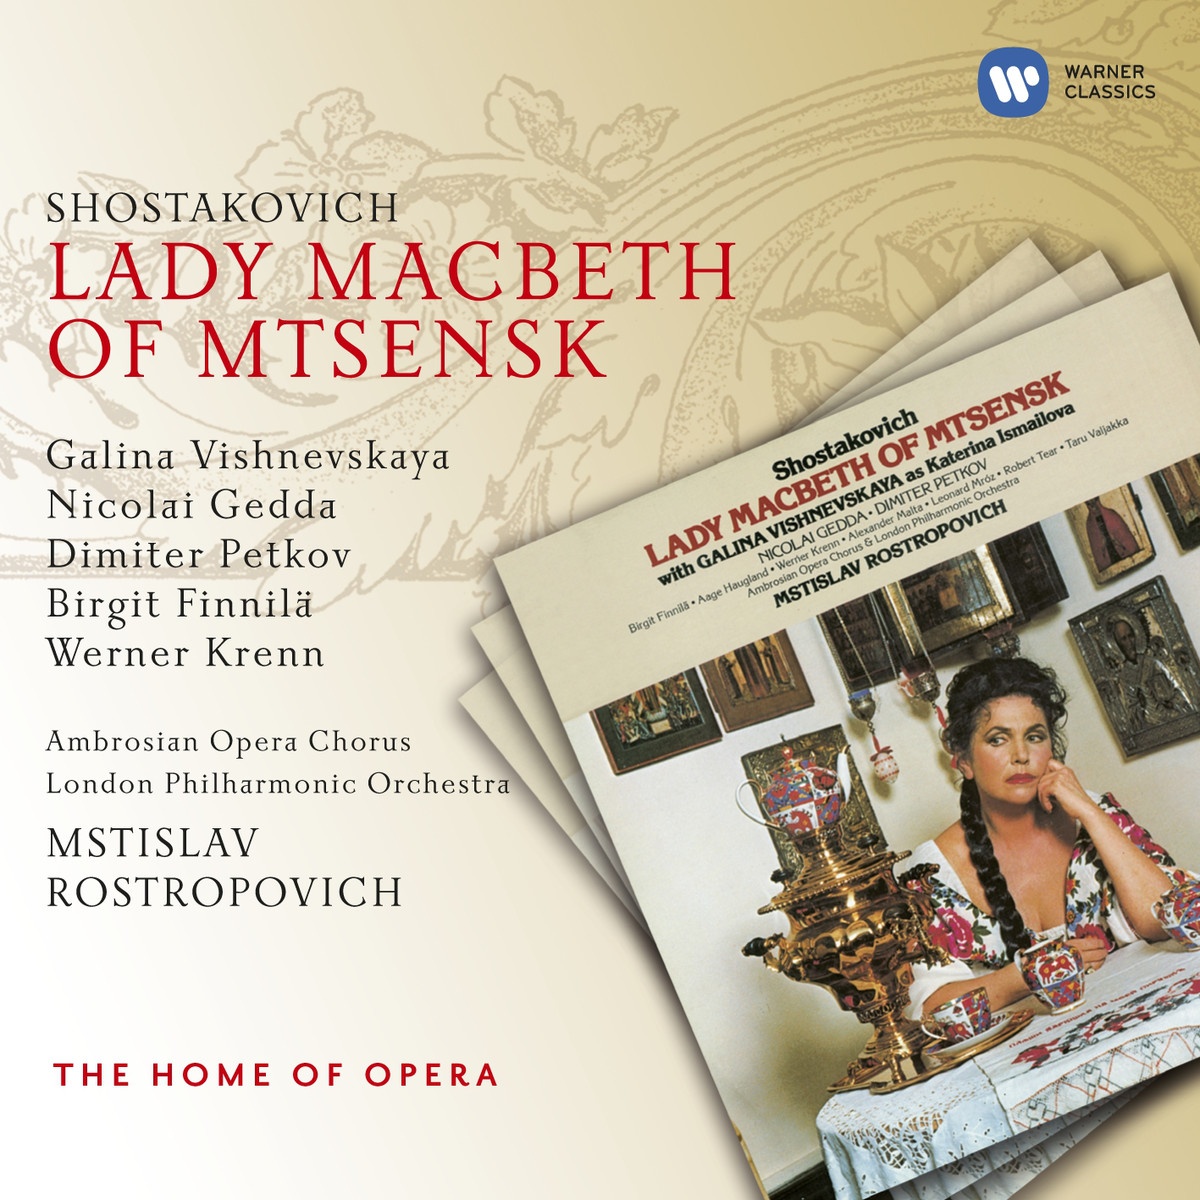 Lady Macbeth of Mtsensk 2002 Digital Remaster, Act 3, Dritter Akt, Troisie me Acte, Scene 7, Siebte Szene, Septie me Sce ne: Interlude Orchestra